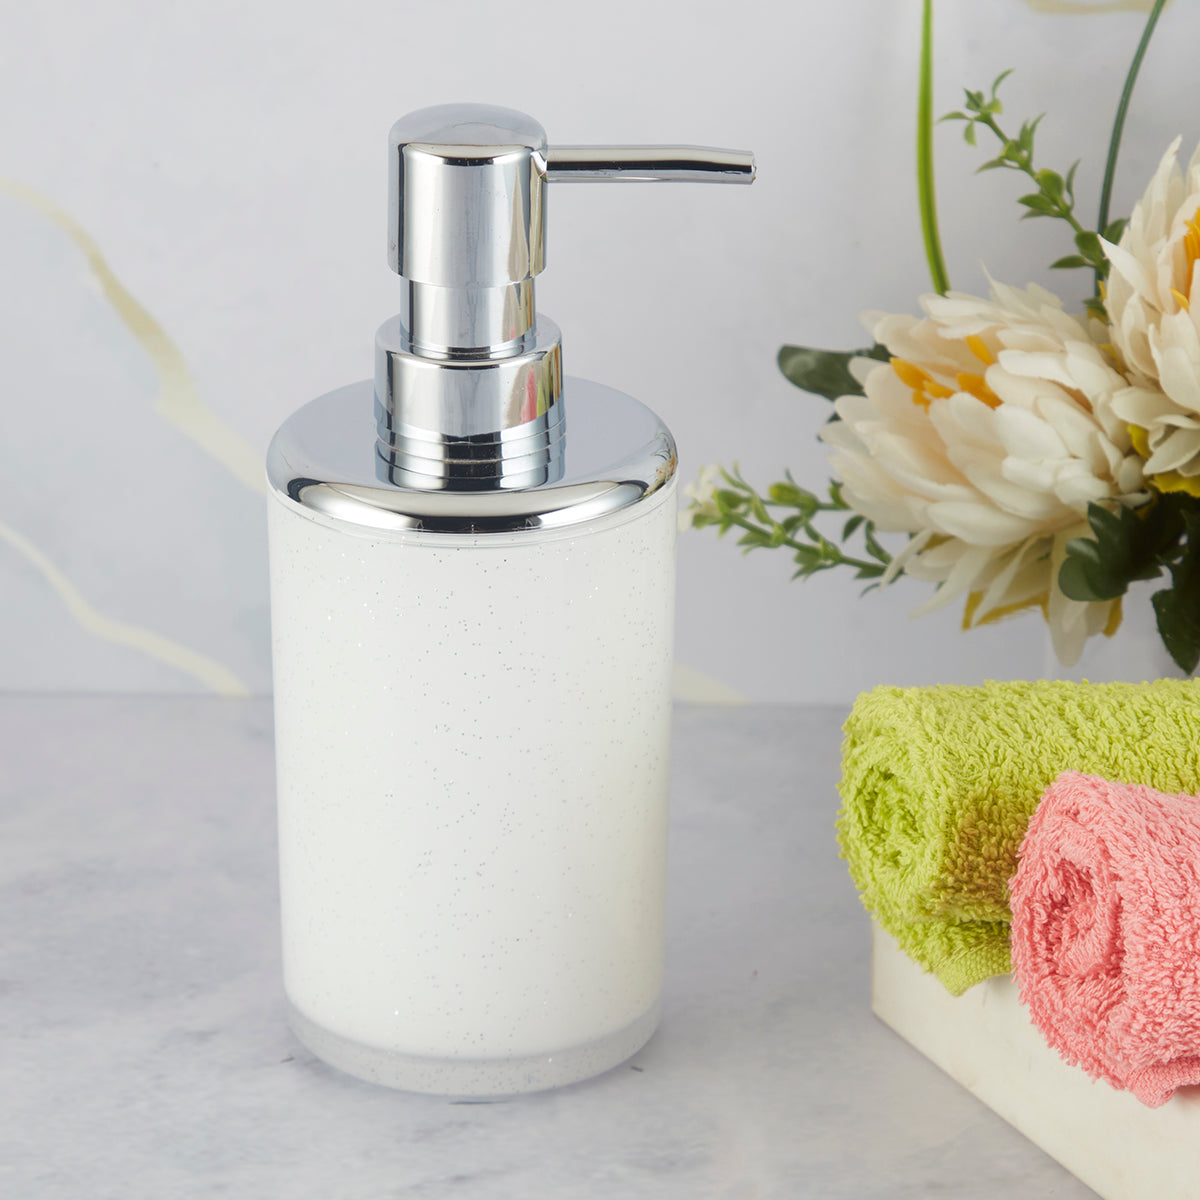 Acrylic Soap Dispenser Pump for Bathroom (10017)